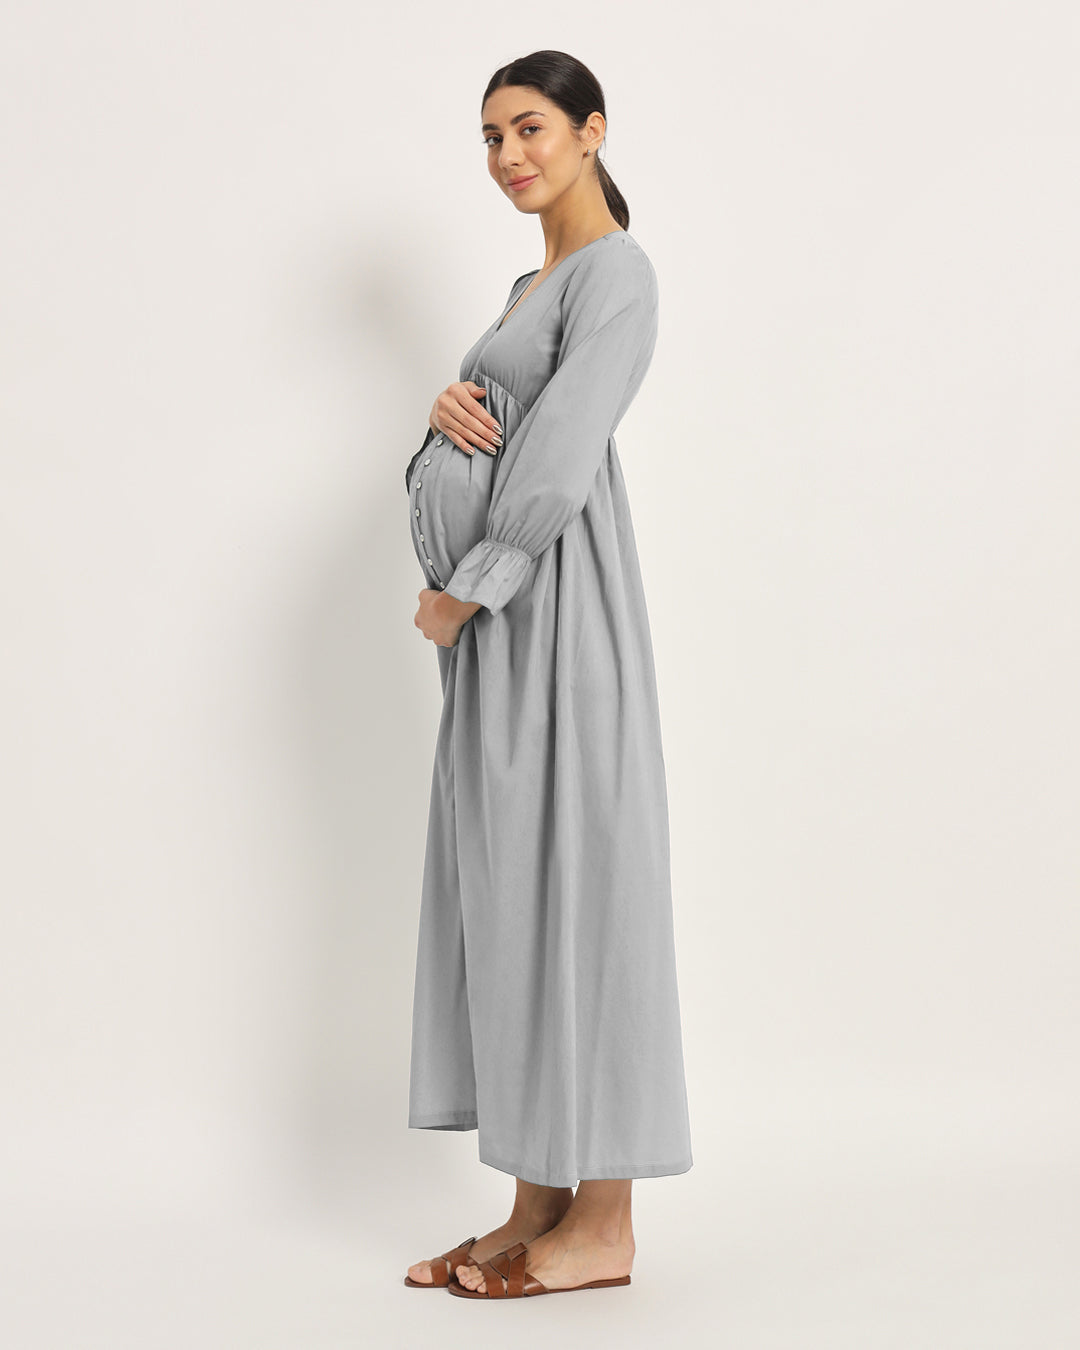 Iced Grey Glowing Bellies Maternity & Nursing Dress